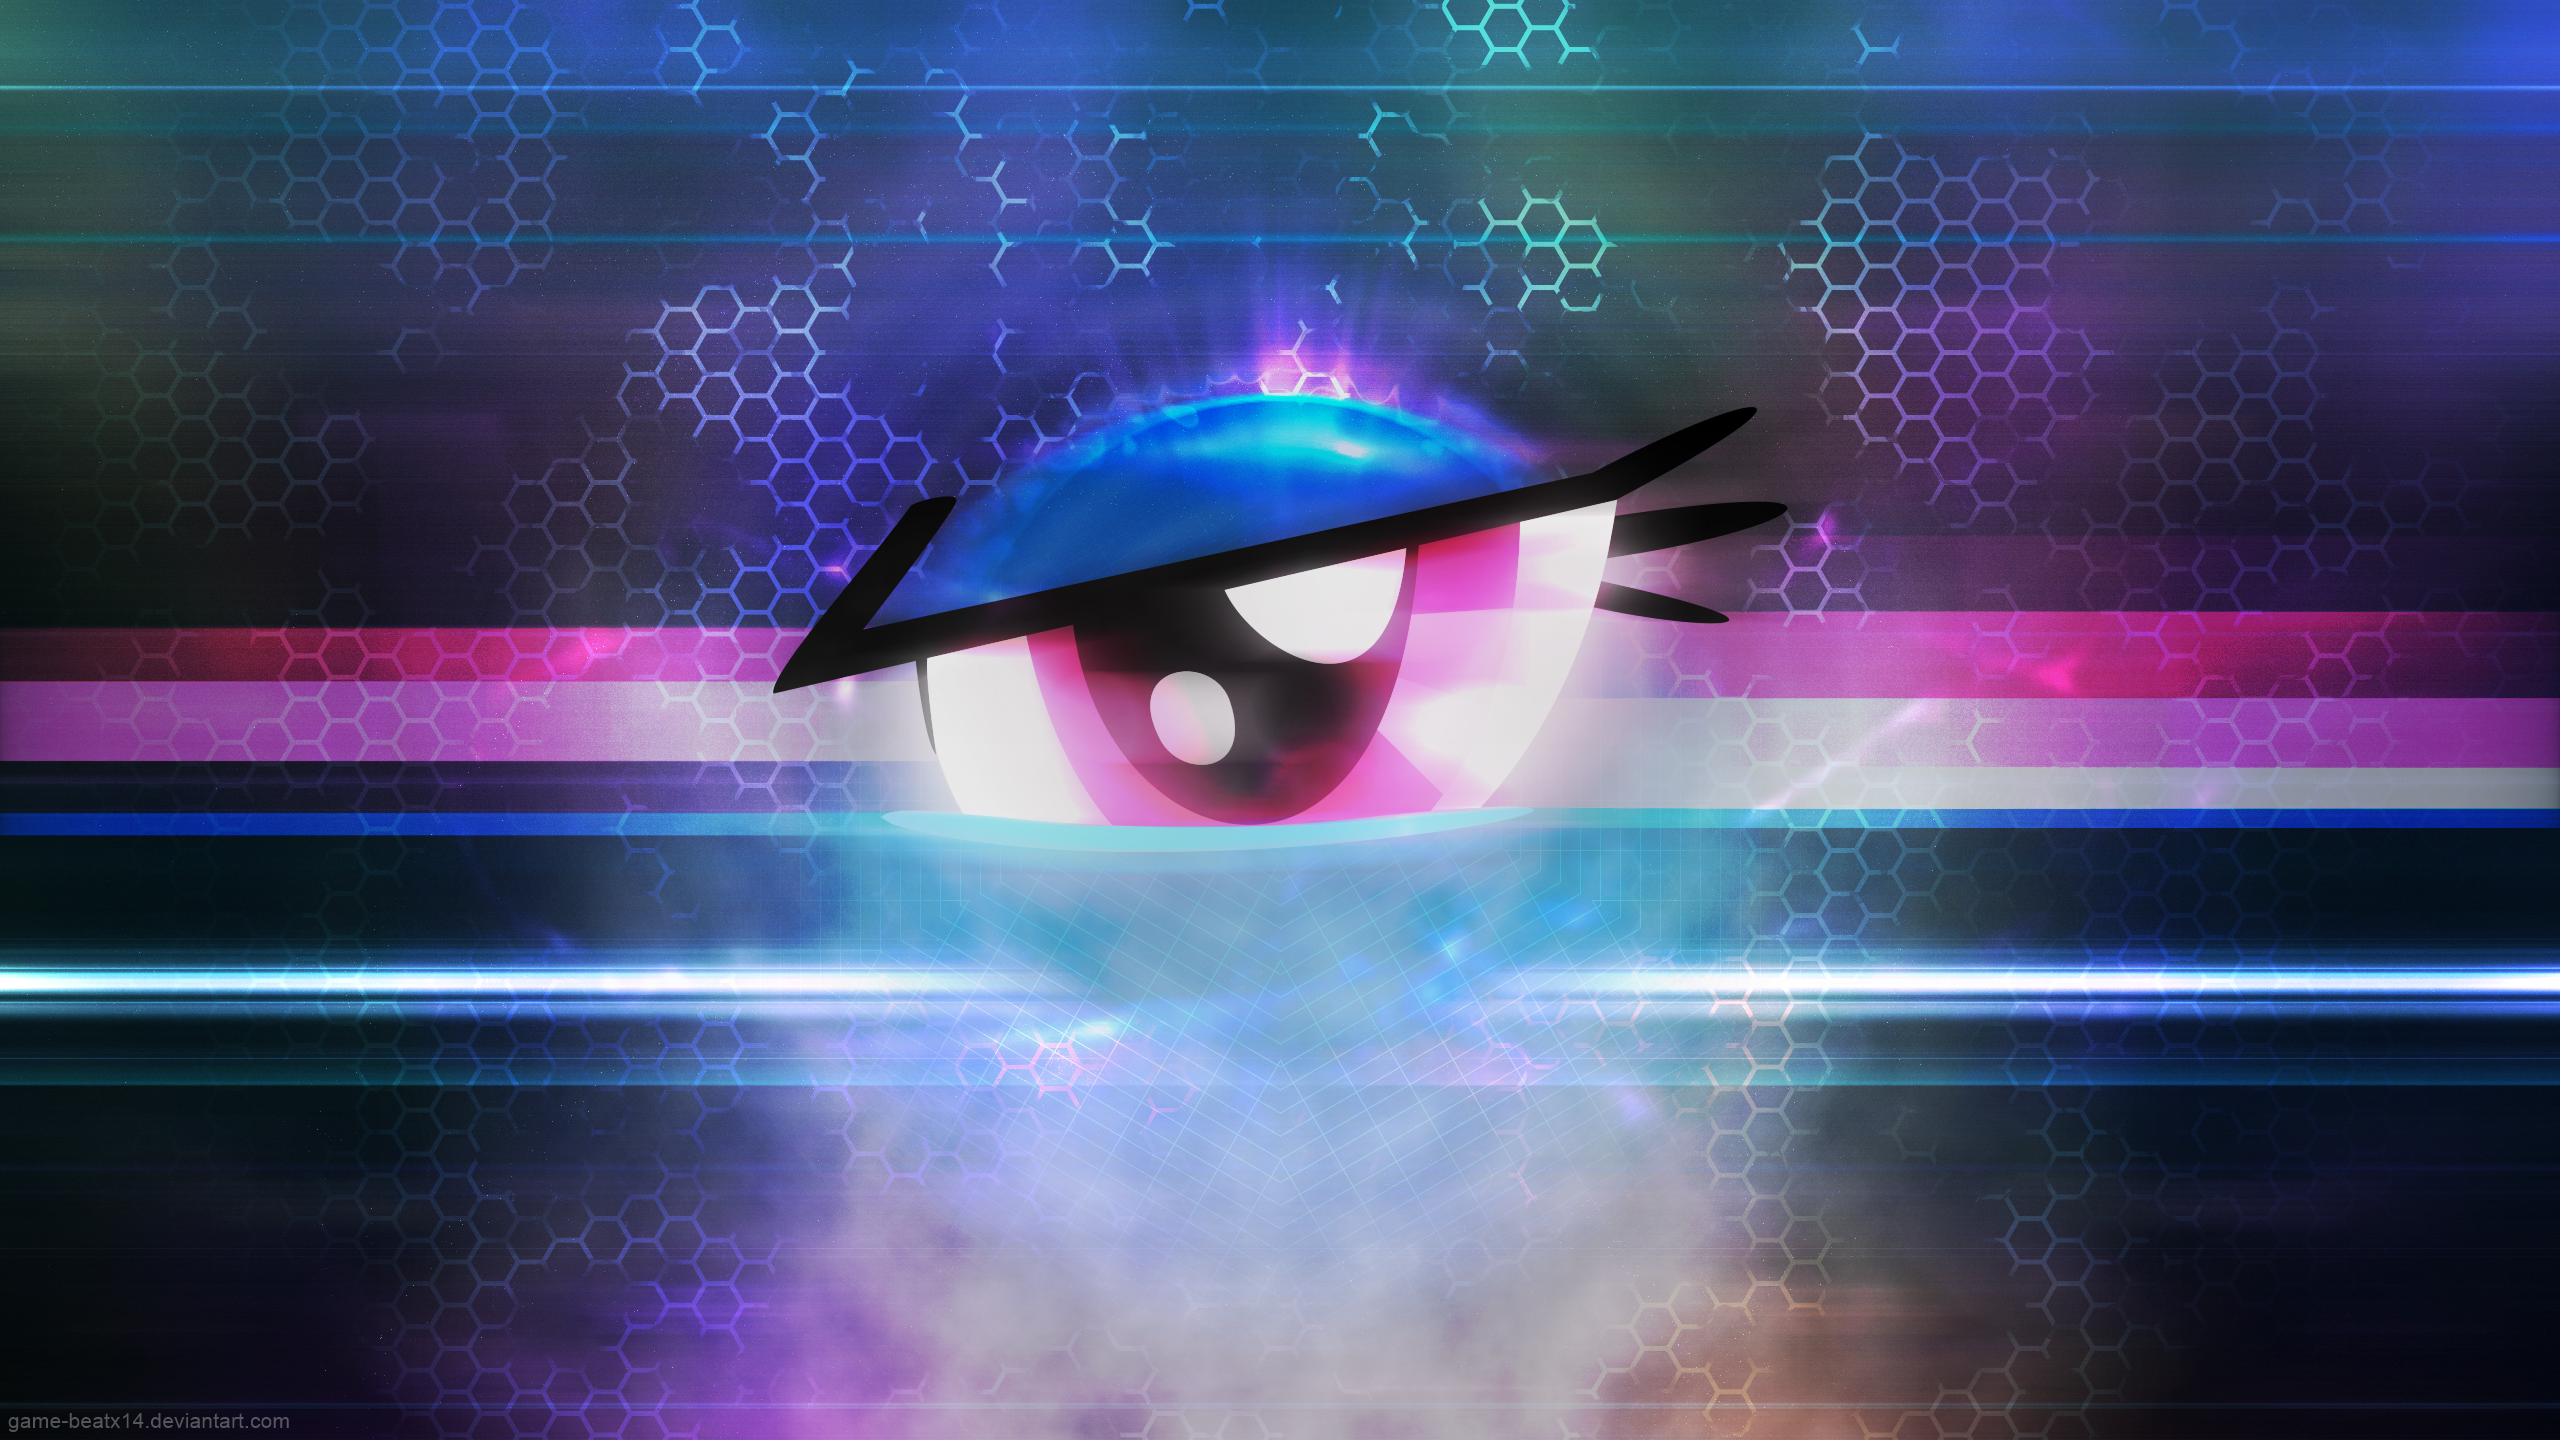 Eye of the Rainbow by Game-BeatX14 and VigorousVisuals